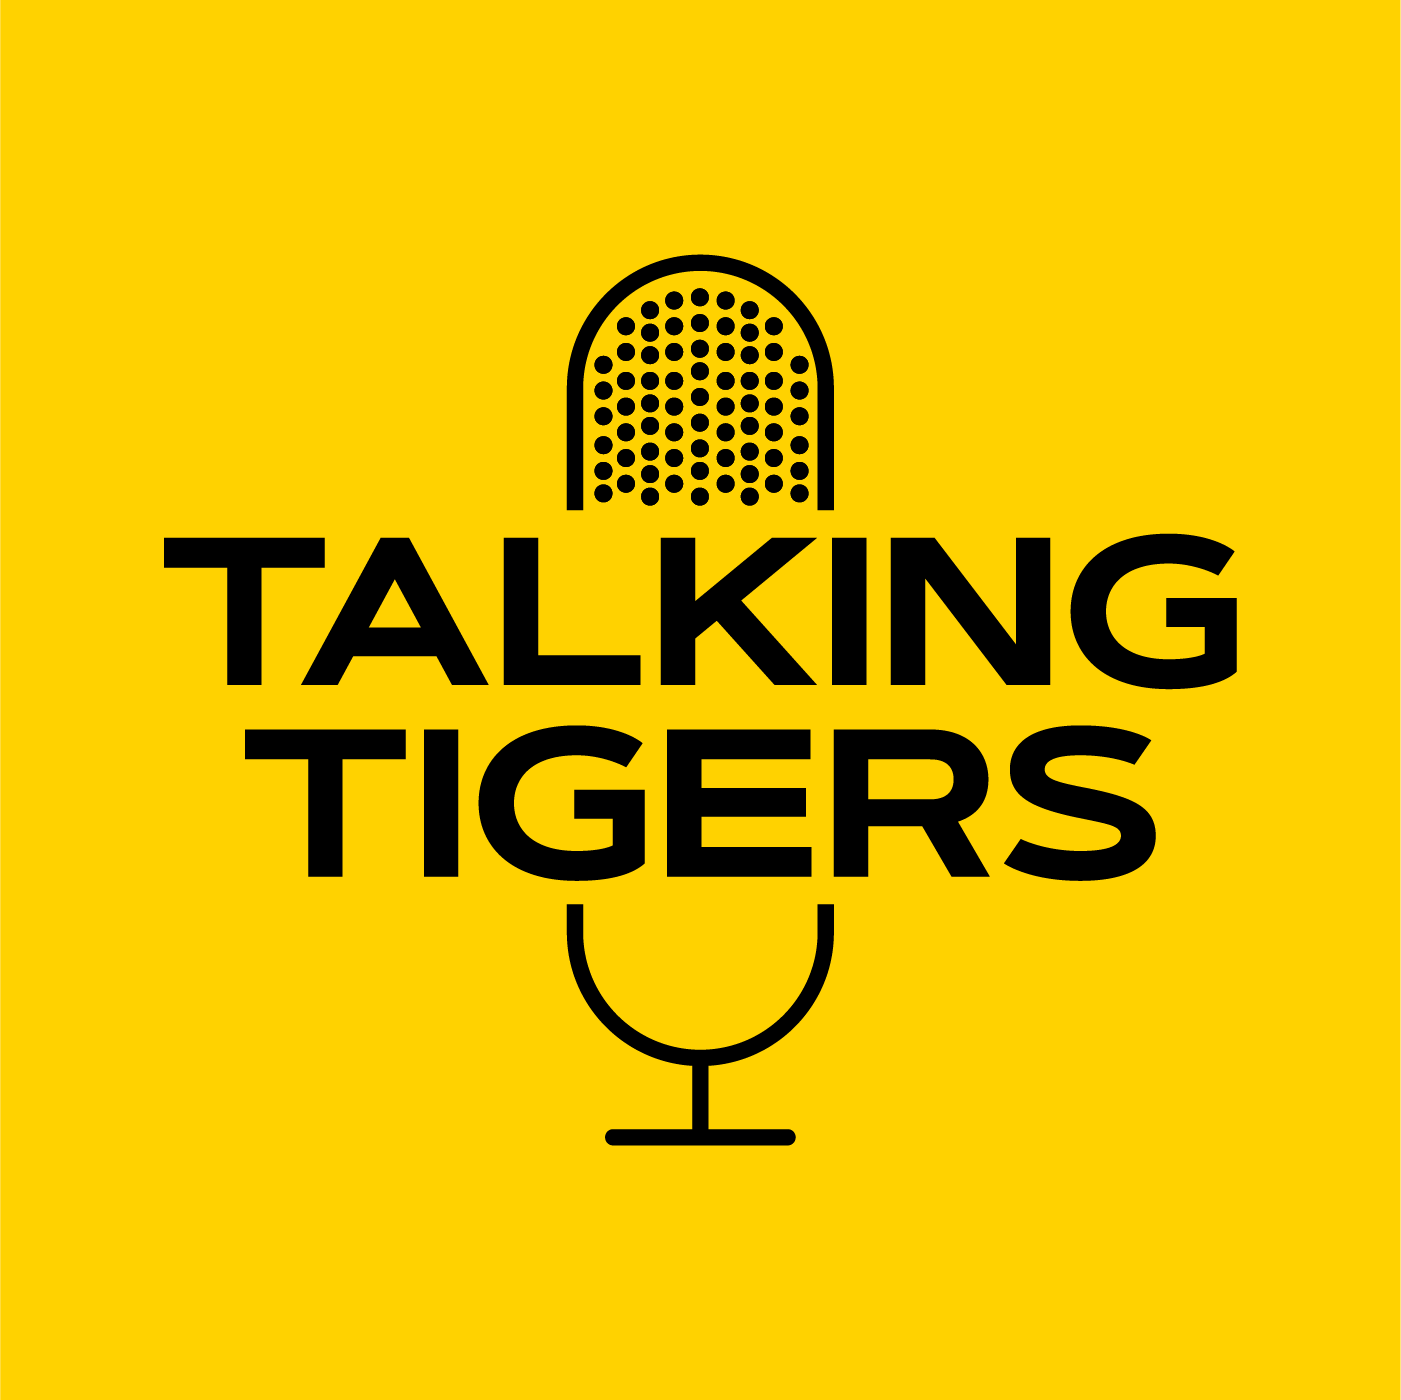 Talking Tigers: We're back